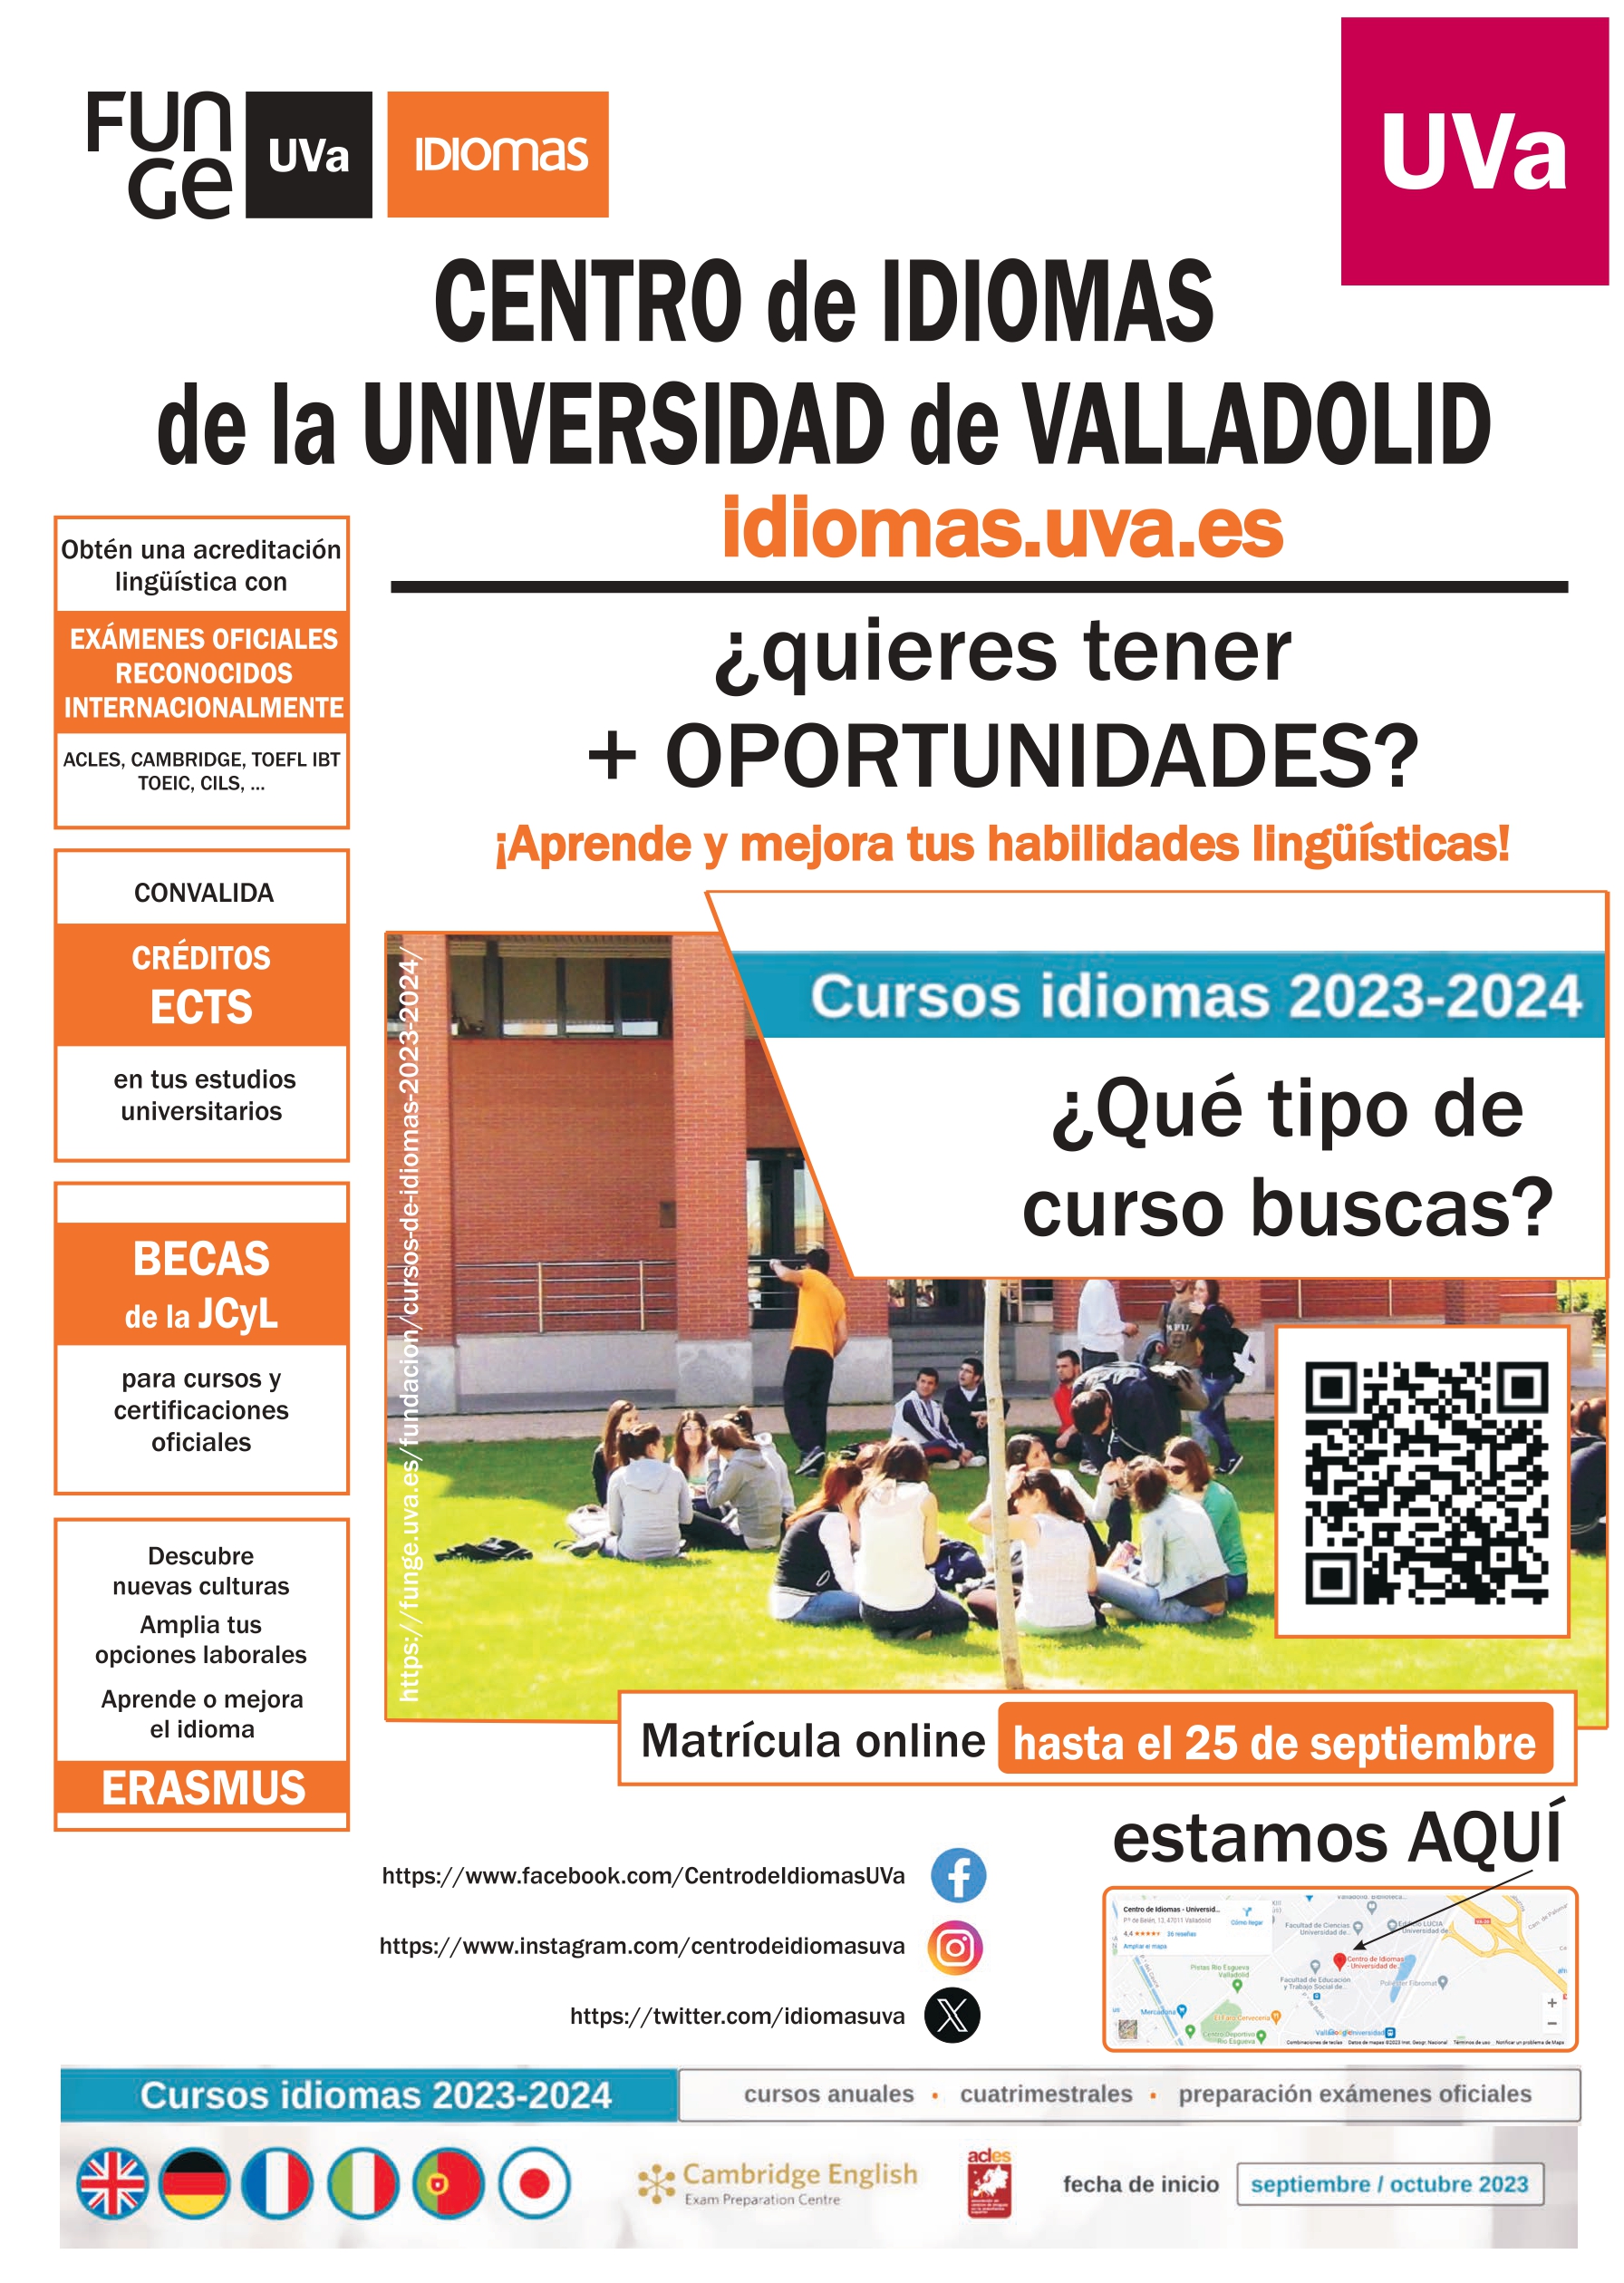 Oferta cursos del Centro de Idiomas de la UVa 2023-24